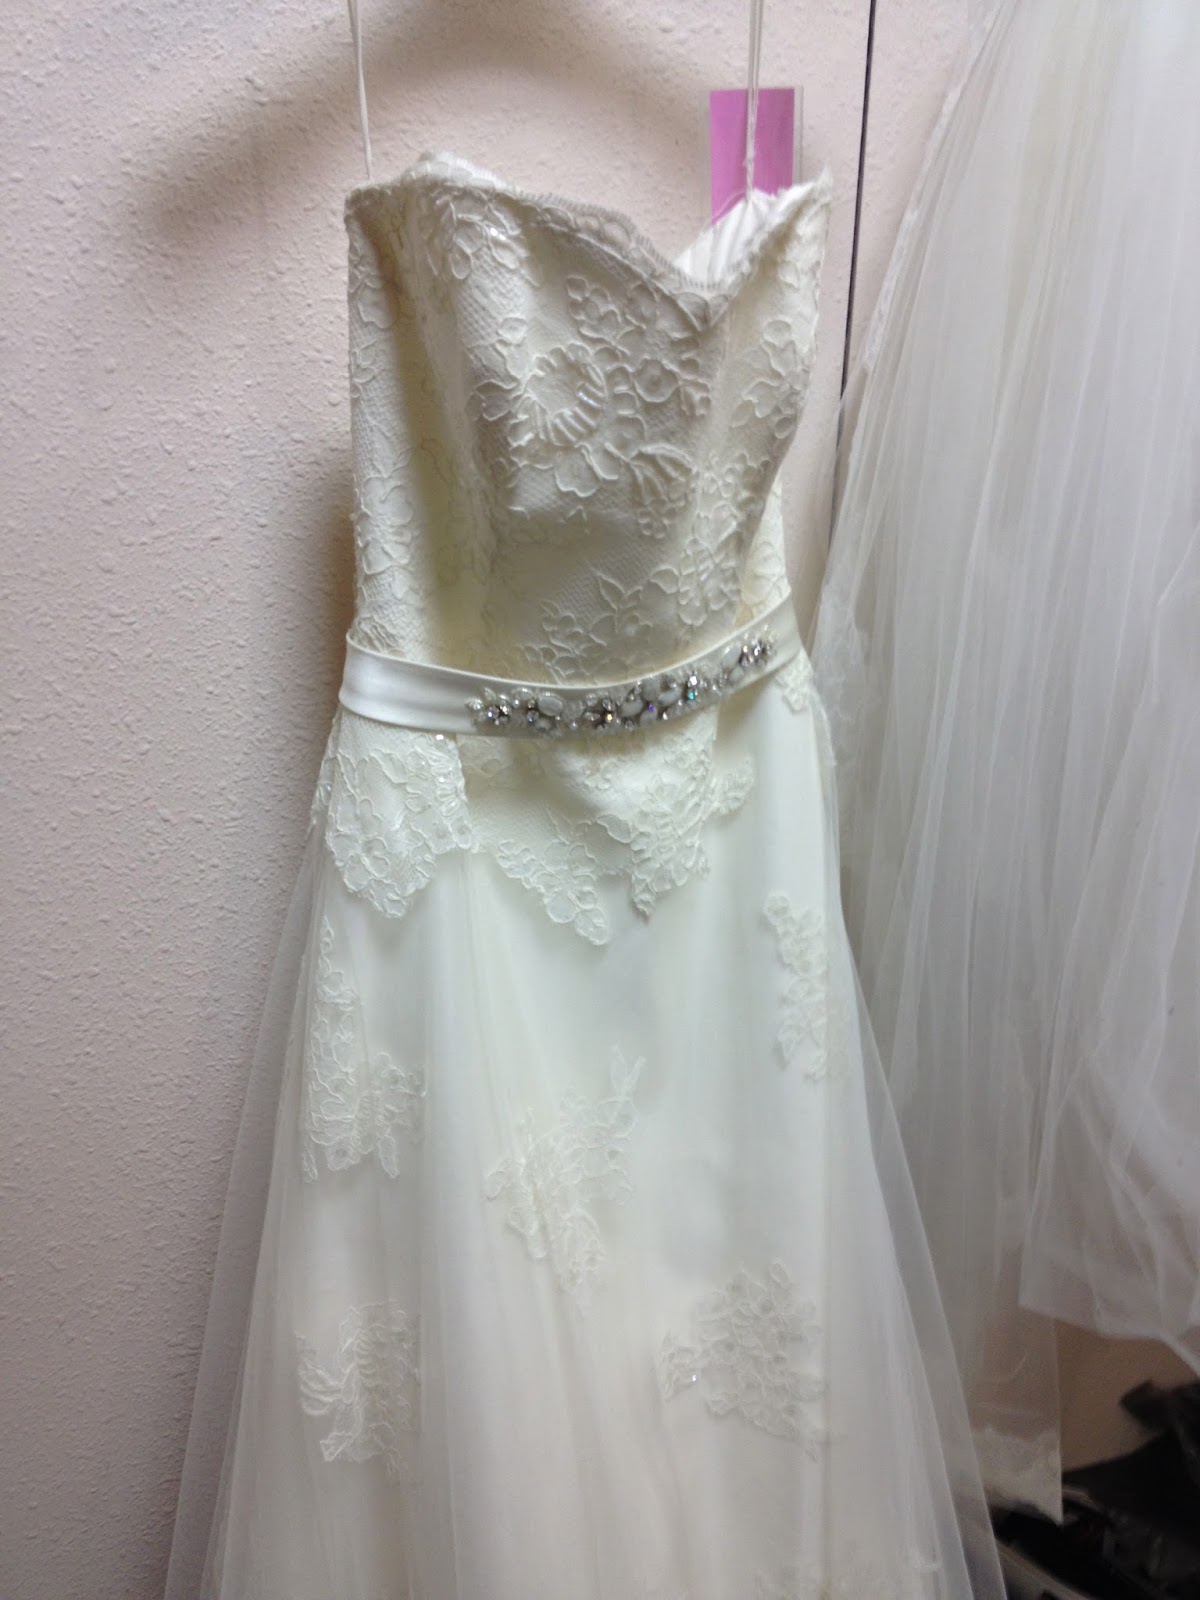 Think Pink Wedding Blog: The Dress!